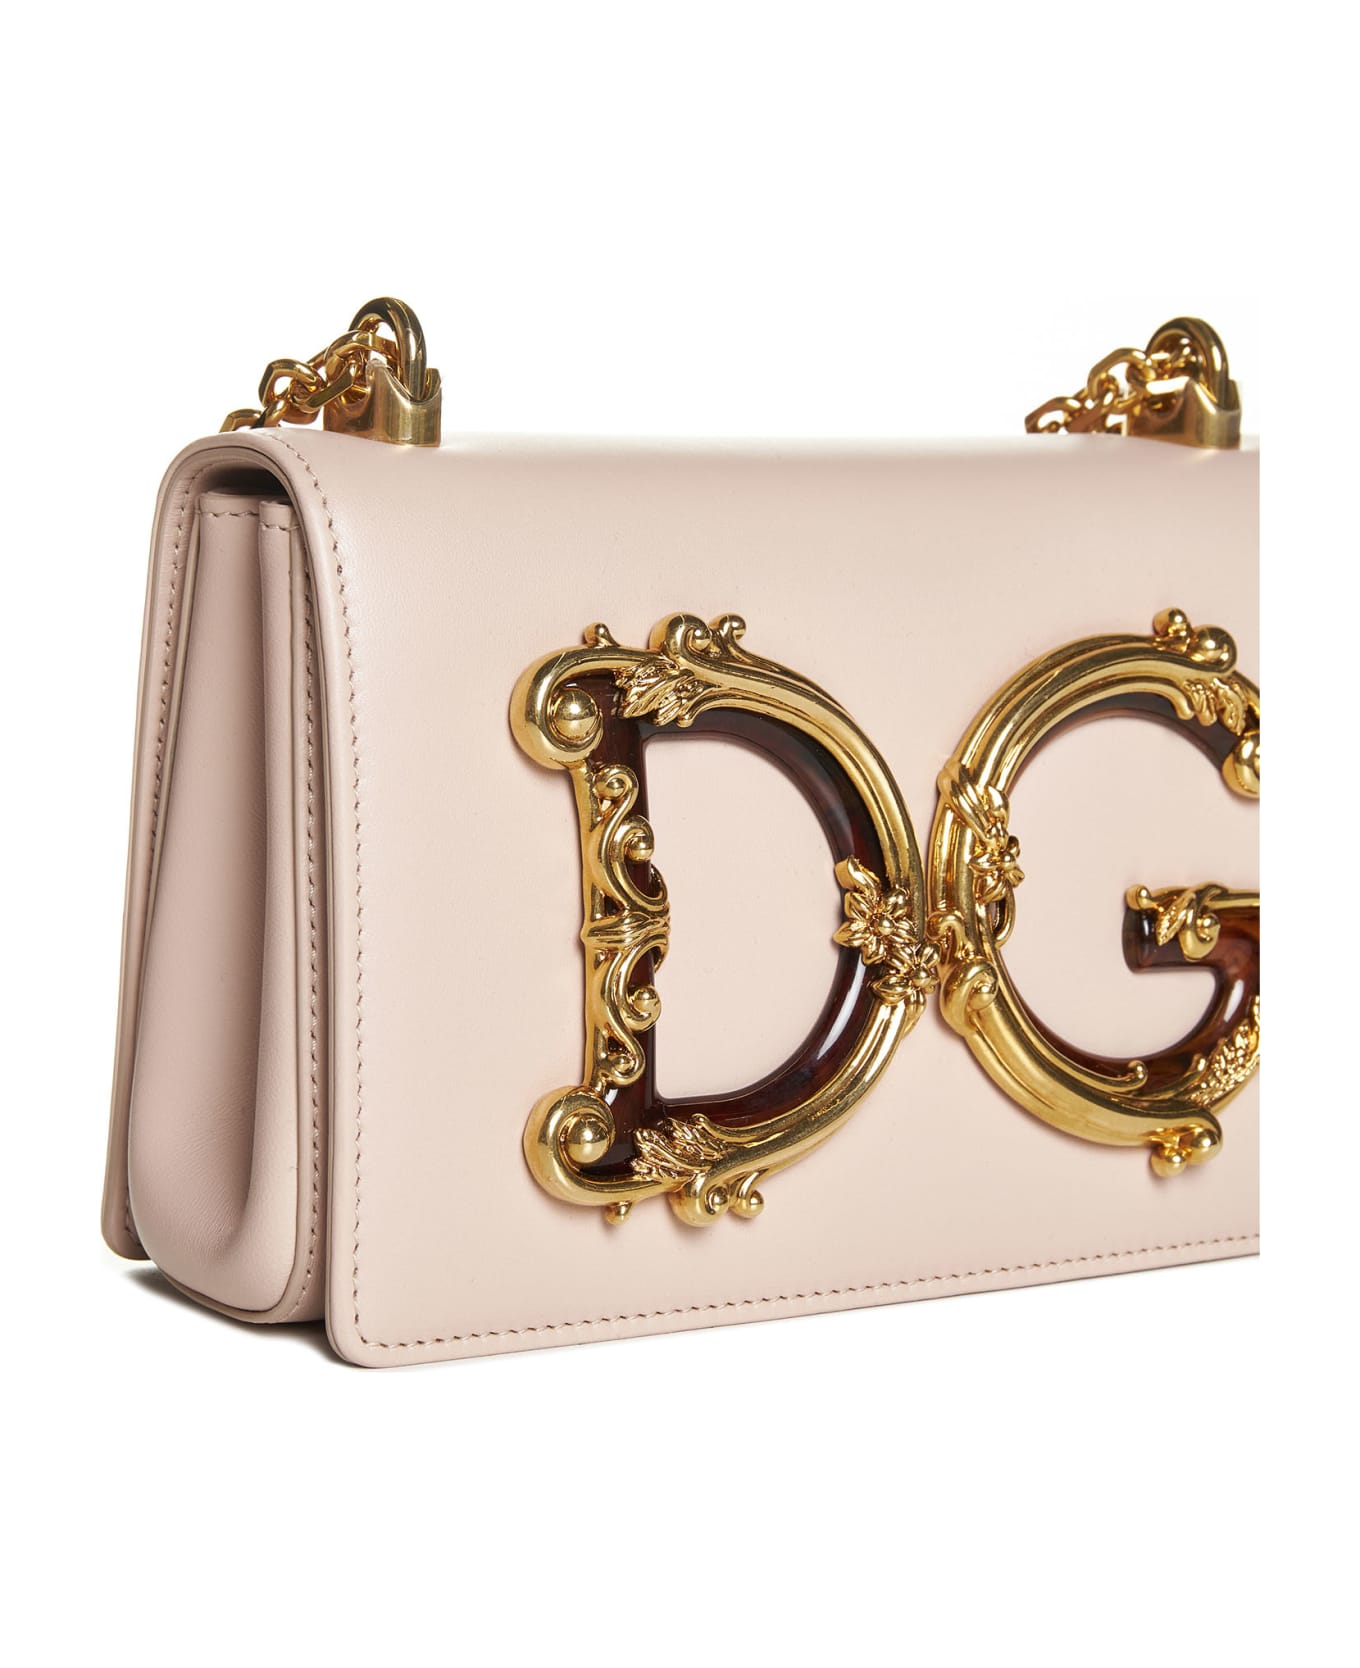 Dolce & Gabbana Dg Girls Crossbody Bag - POWDER